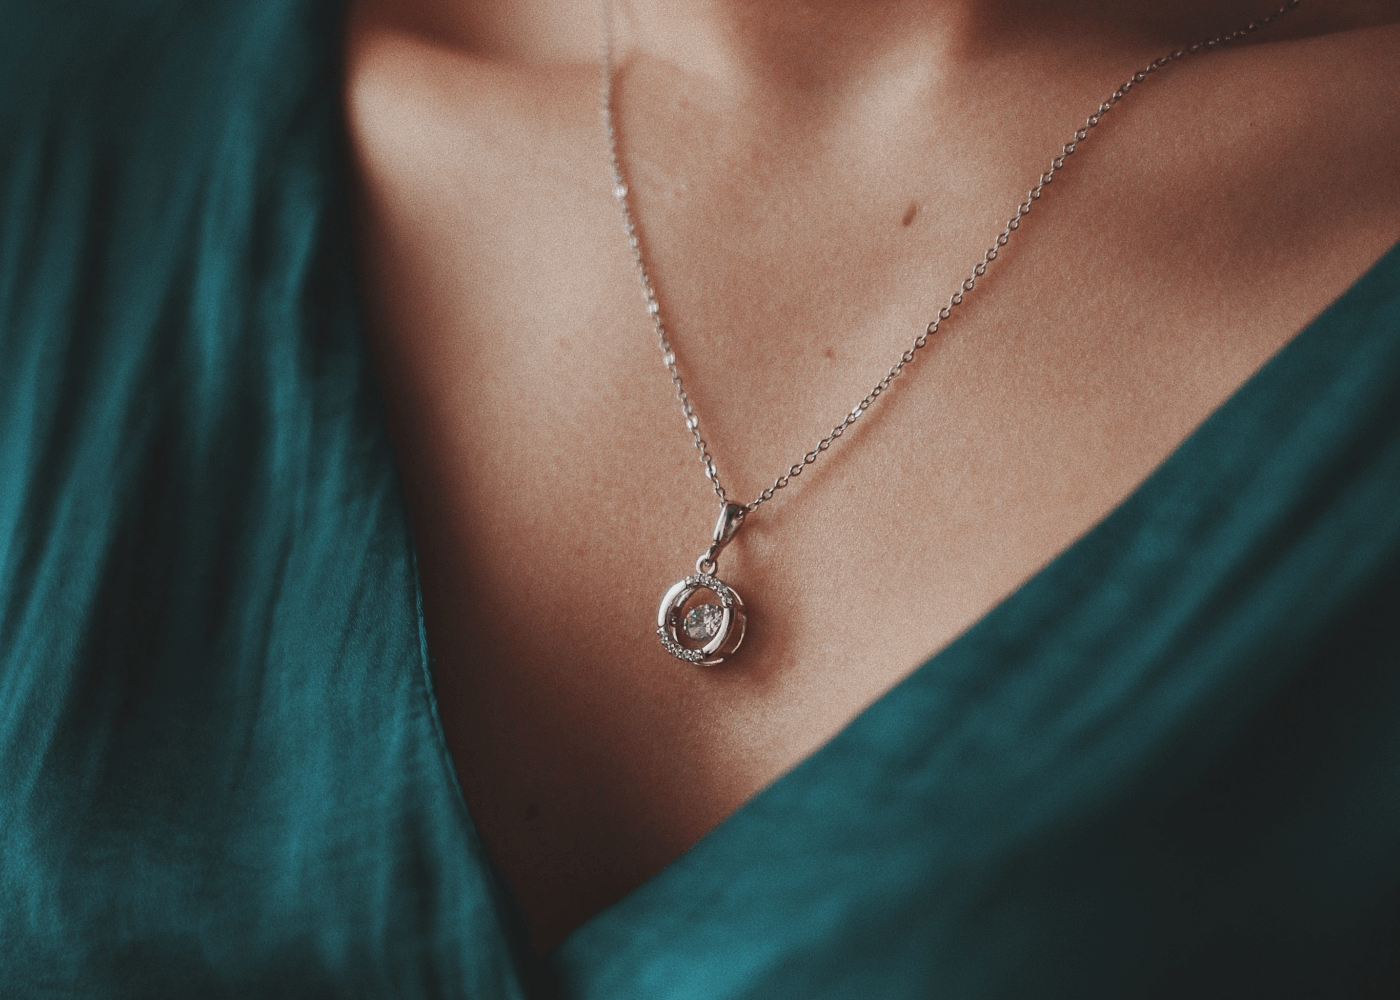 Minimalist necklaces